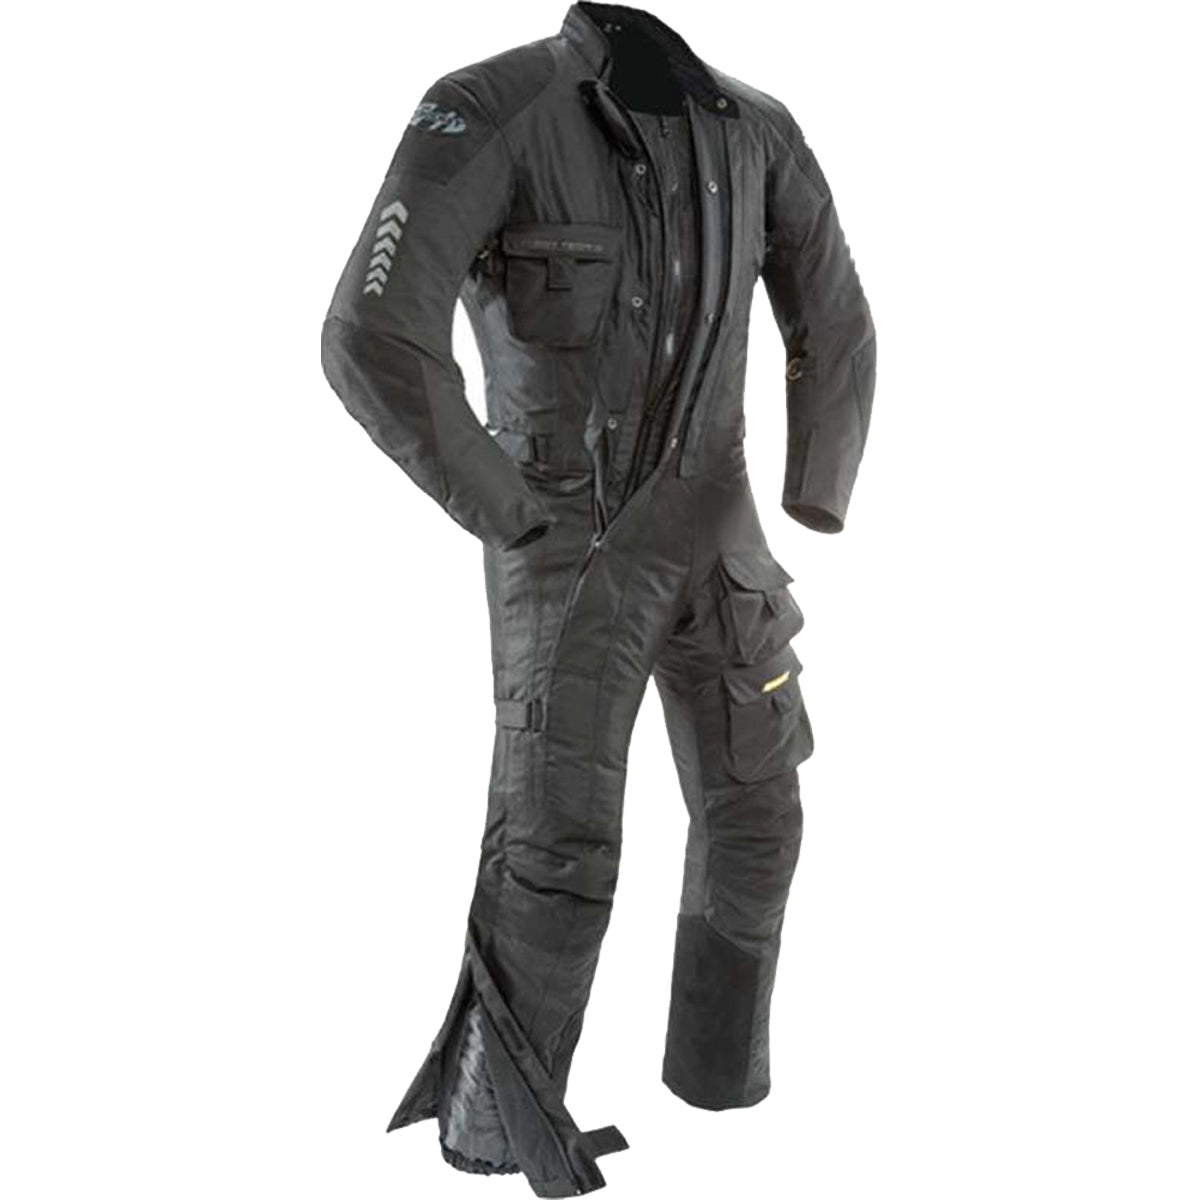 Joe Rocket Survivor Men's Two-Piece Street Race Suits-1370